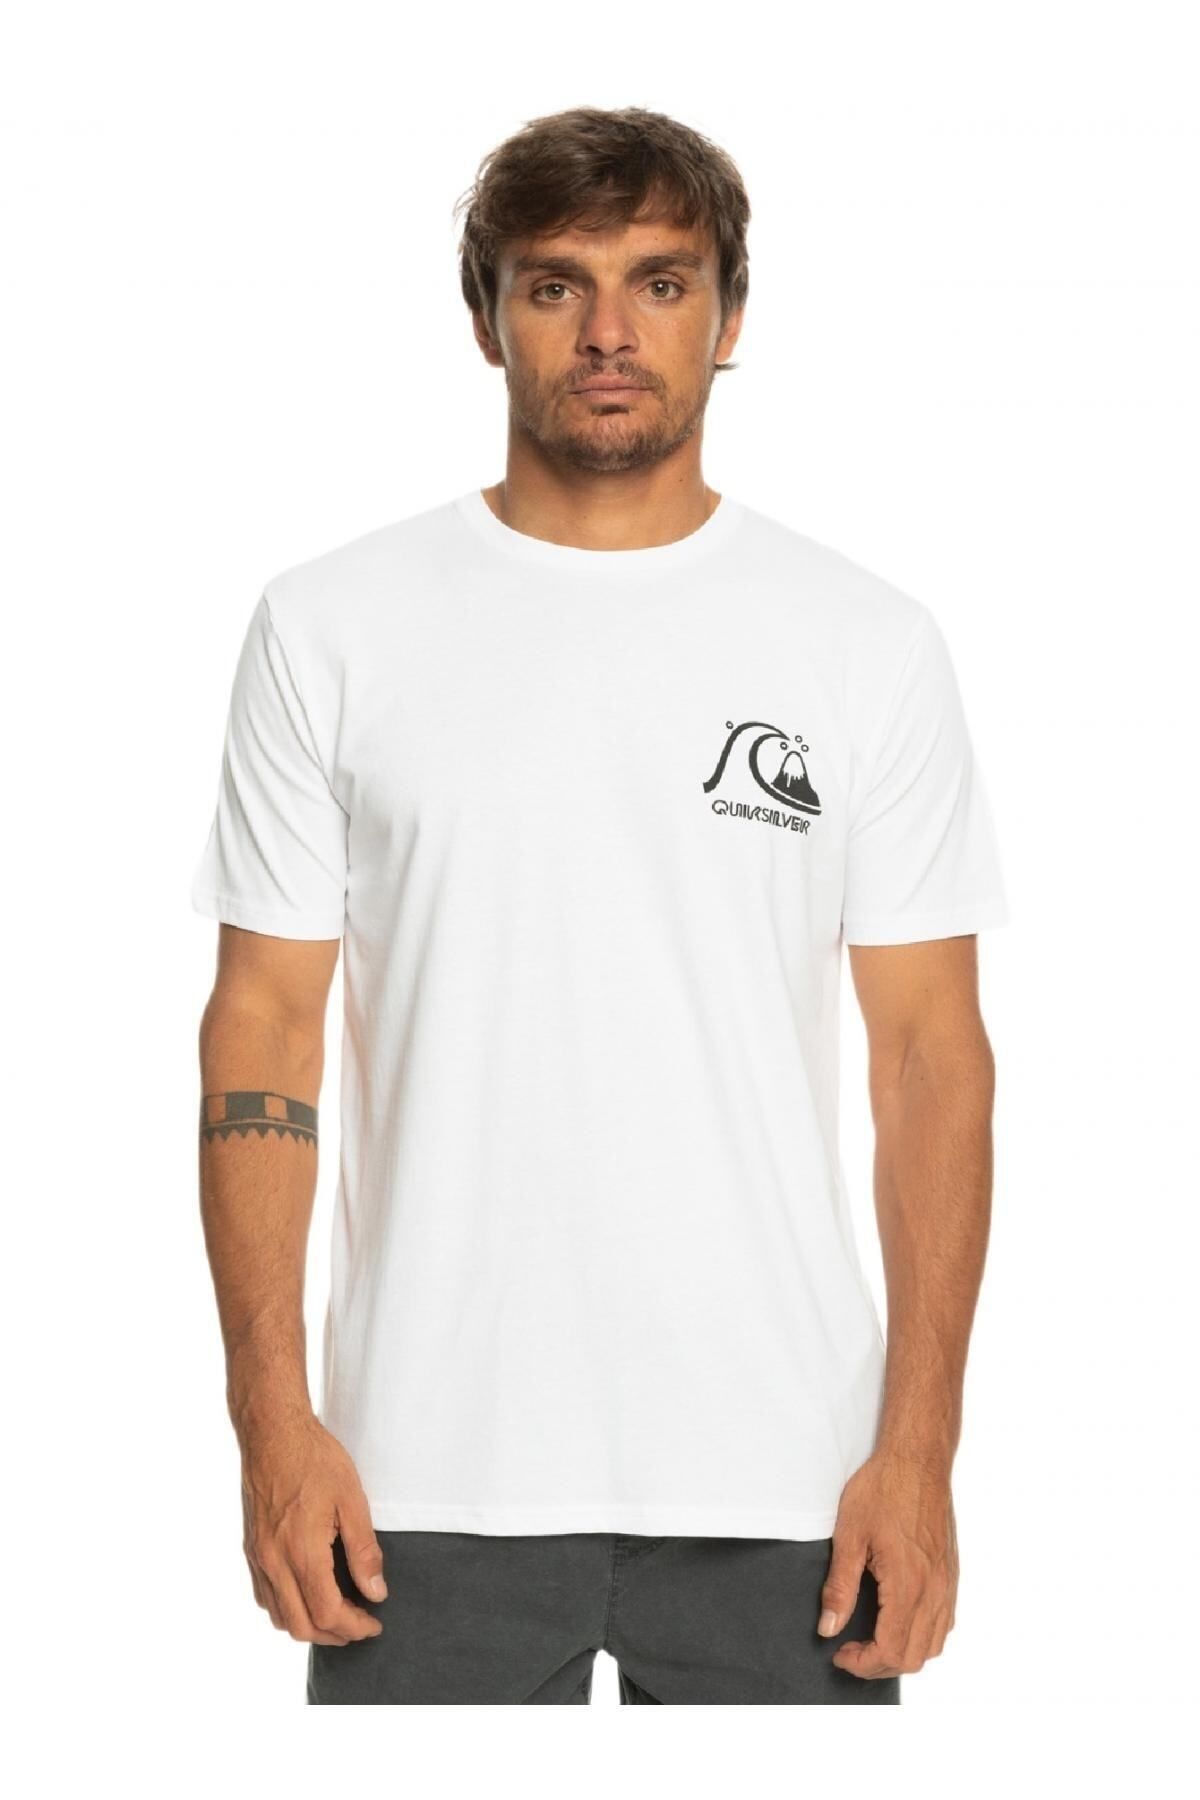 Quiksilver Eqyzt07239 Theoriginaltee M Tees Beyaz Erkek T-shirt